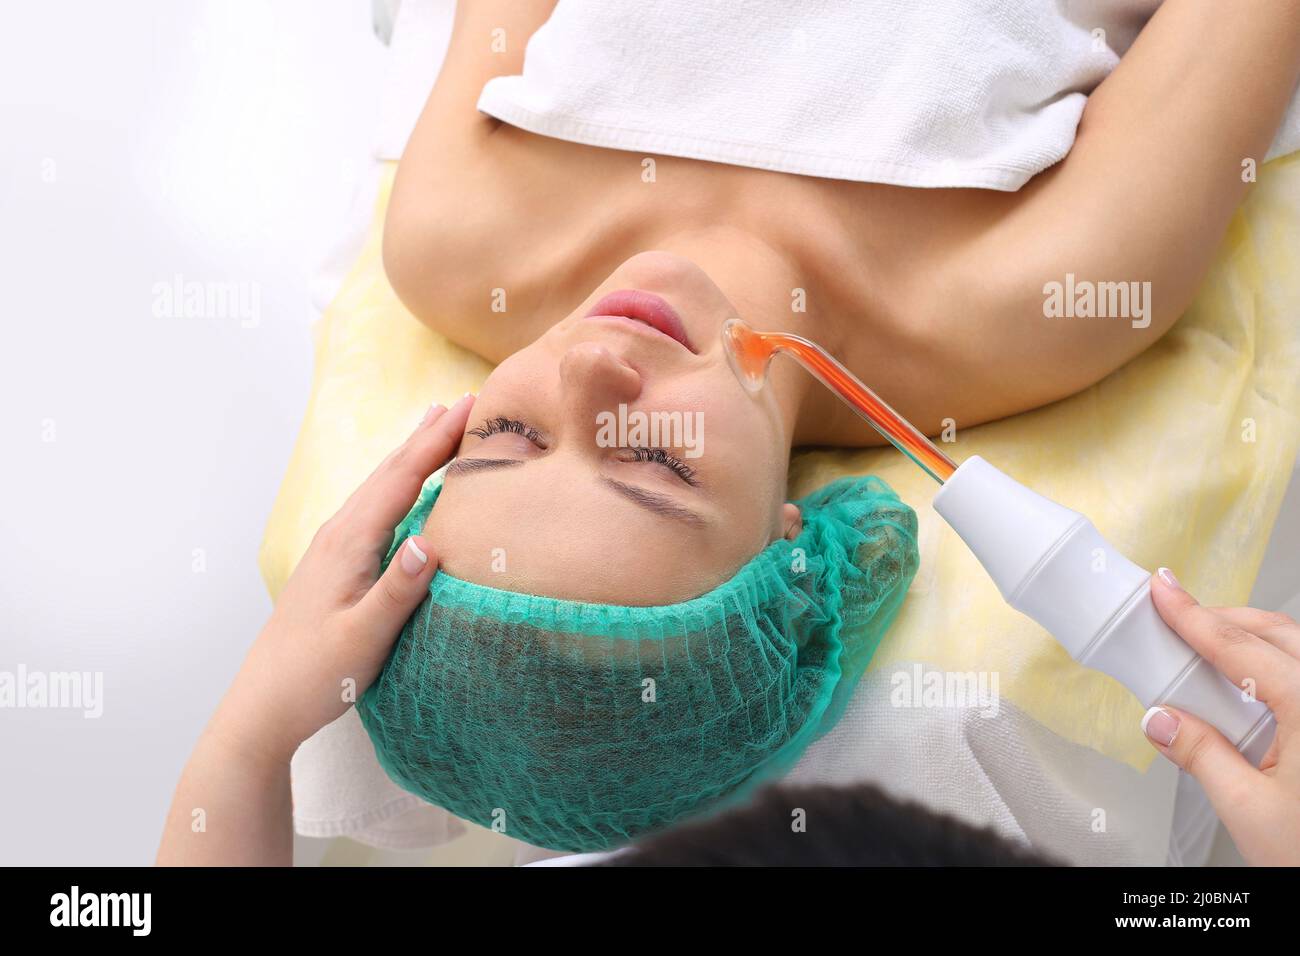 Receiving electric darsonval facial massage procedure. Stock Photo